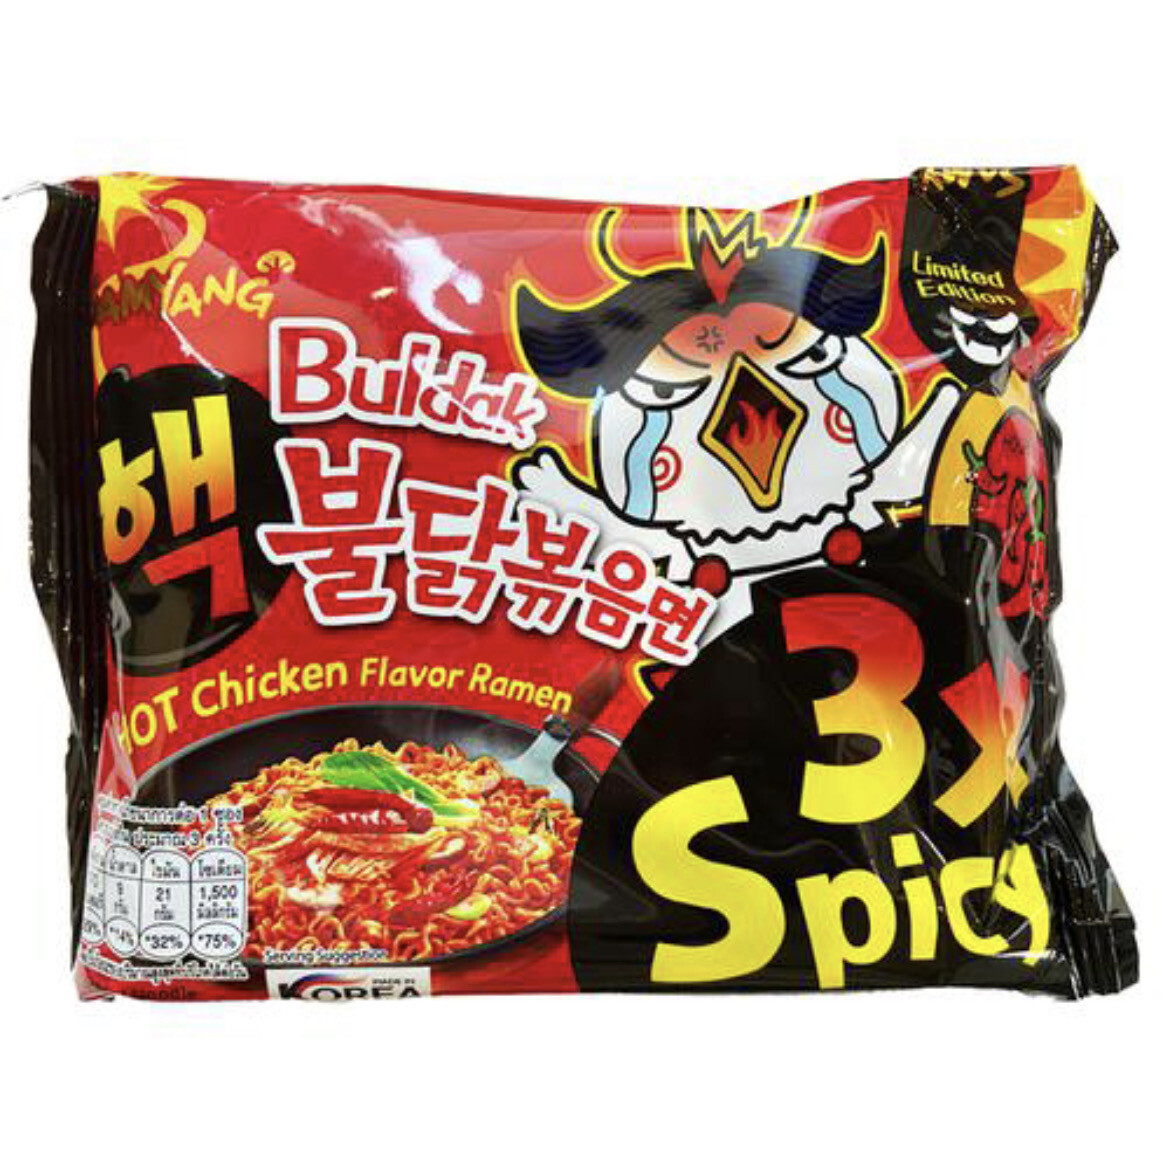 Samyang Buldak 3x Spicy Hot Chicken Flavor Ramen Noodles - 140G